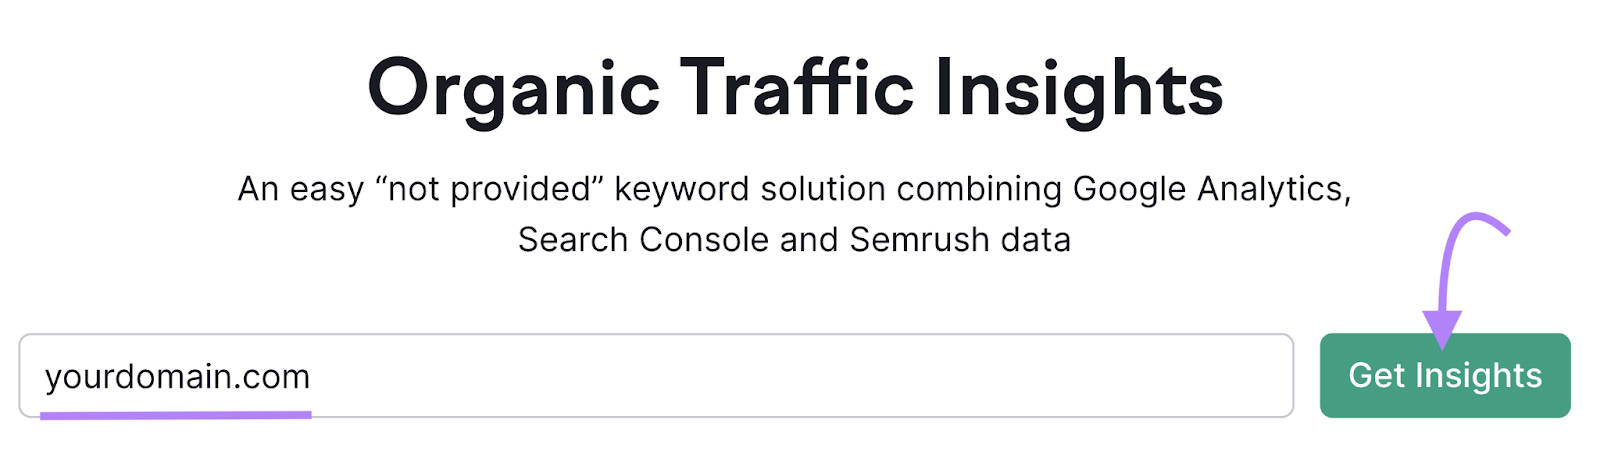 Organic Traffic Insights search bar